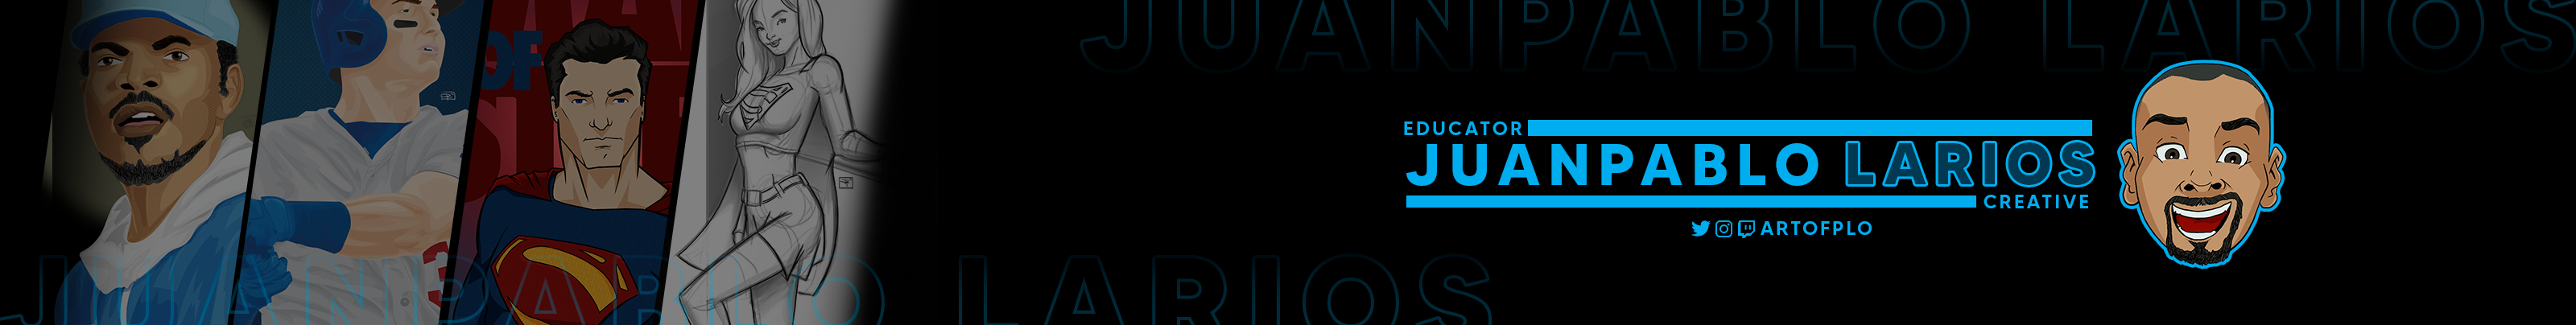 JP Larios's profile banner